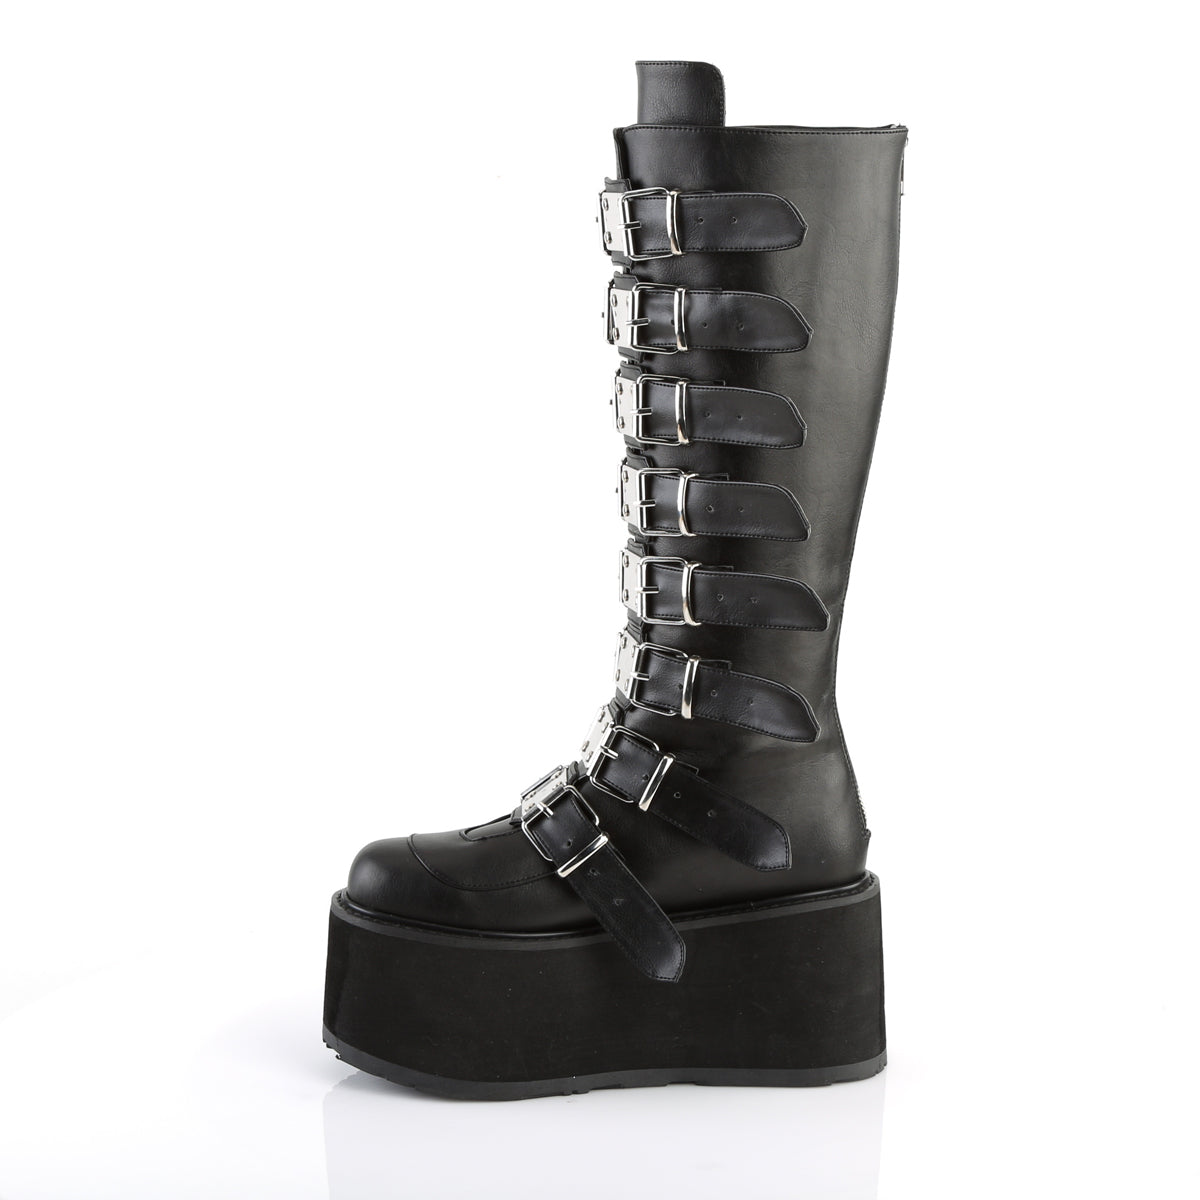 DAMNED-318 Demonia Black Vegan Leather Women's Mid-Calf & Knee High Boots [Demonia Cult Alternative Footwear]